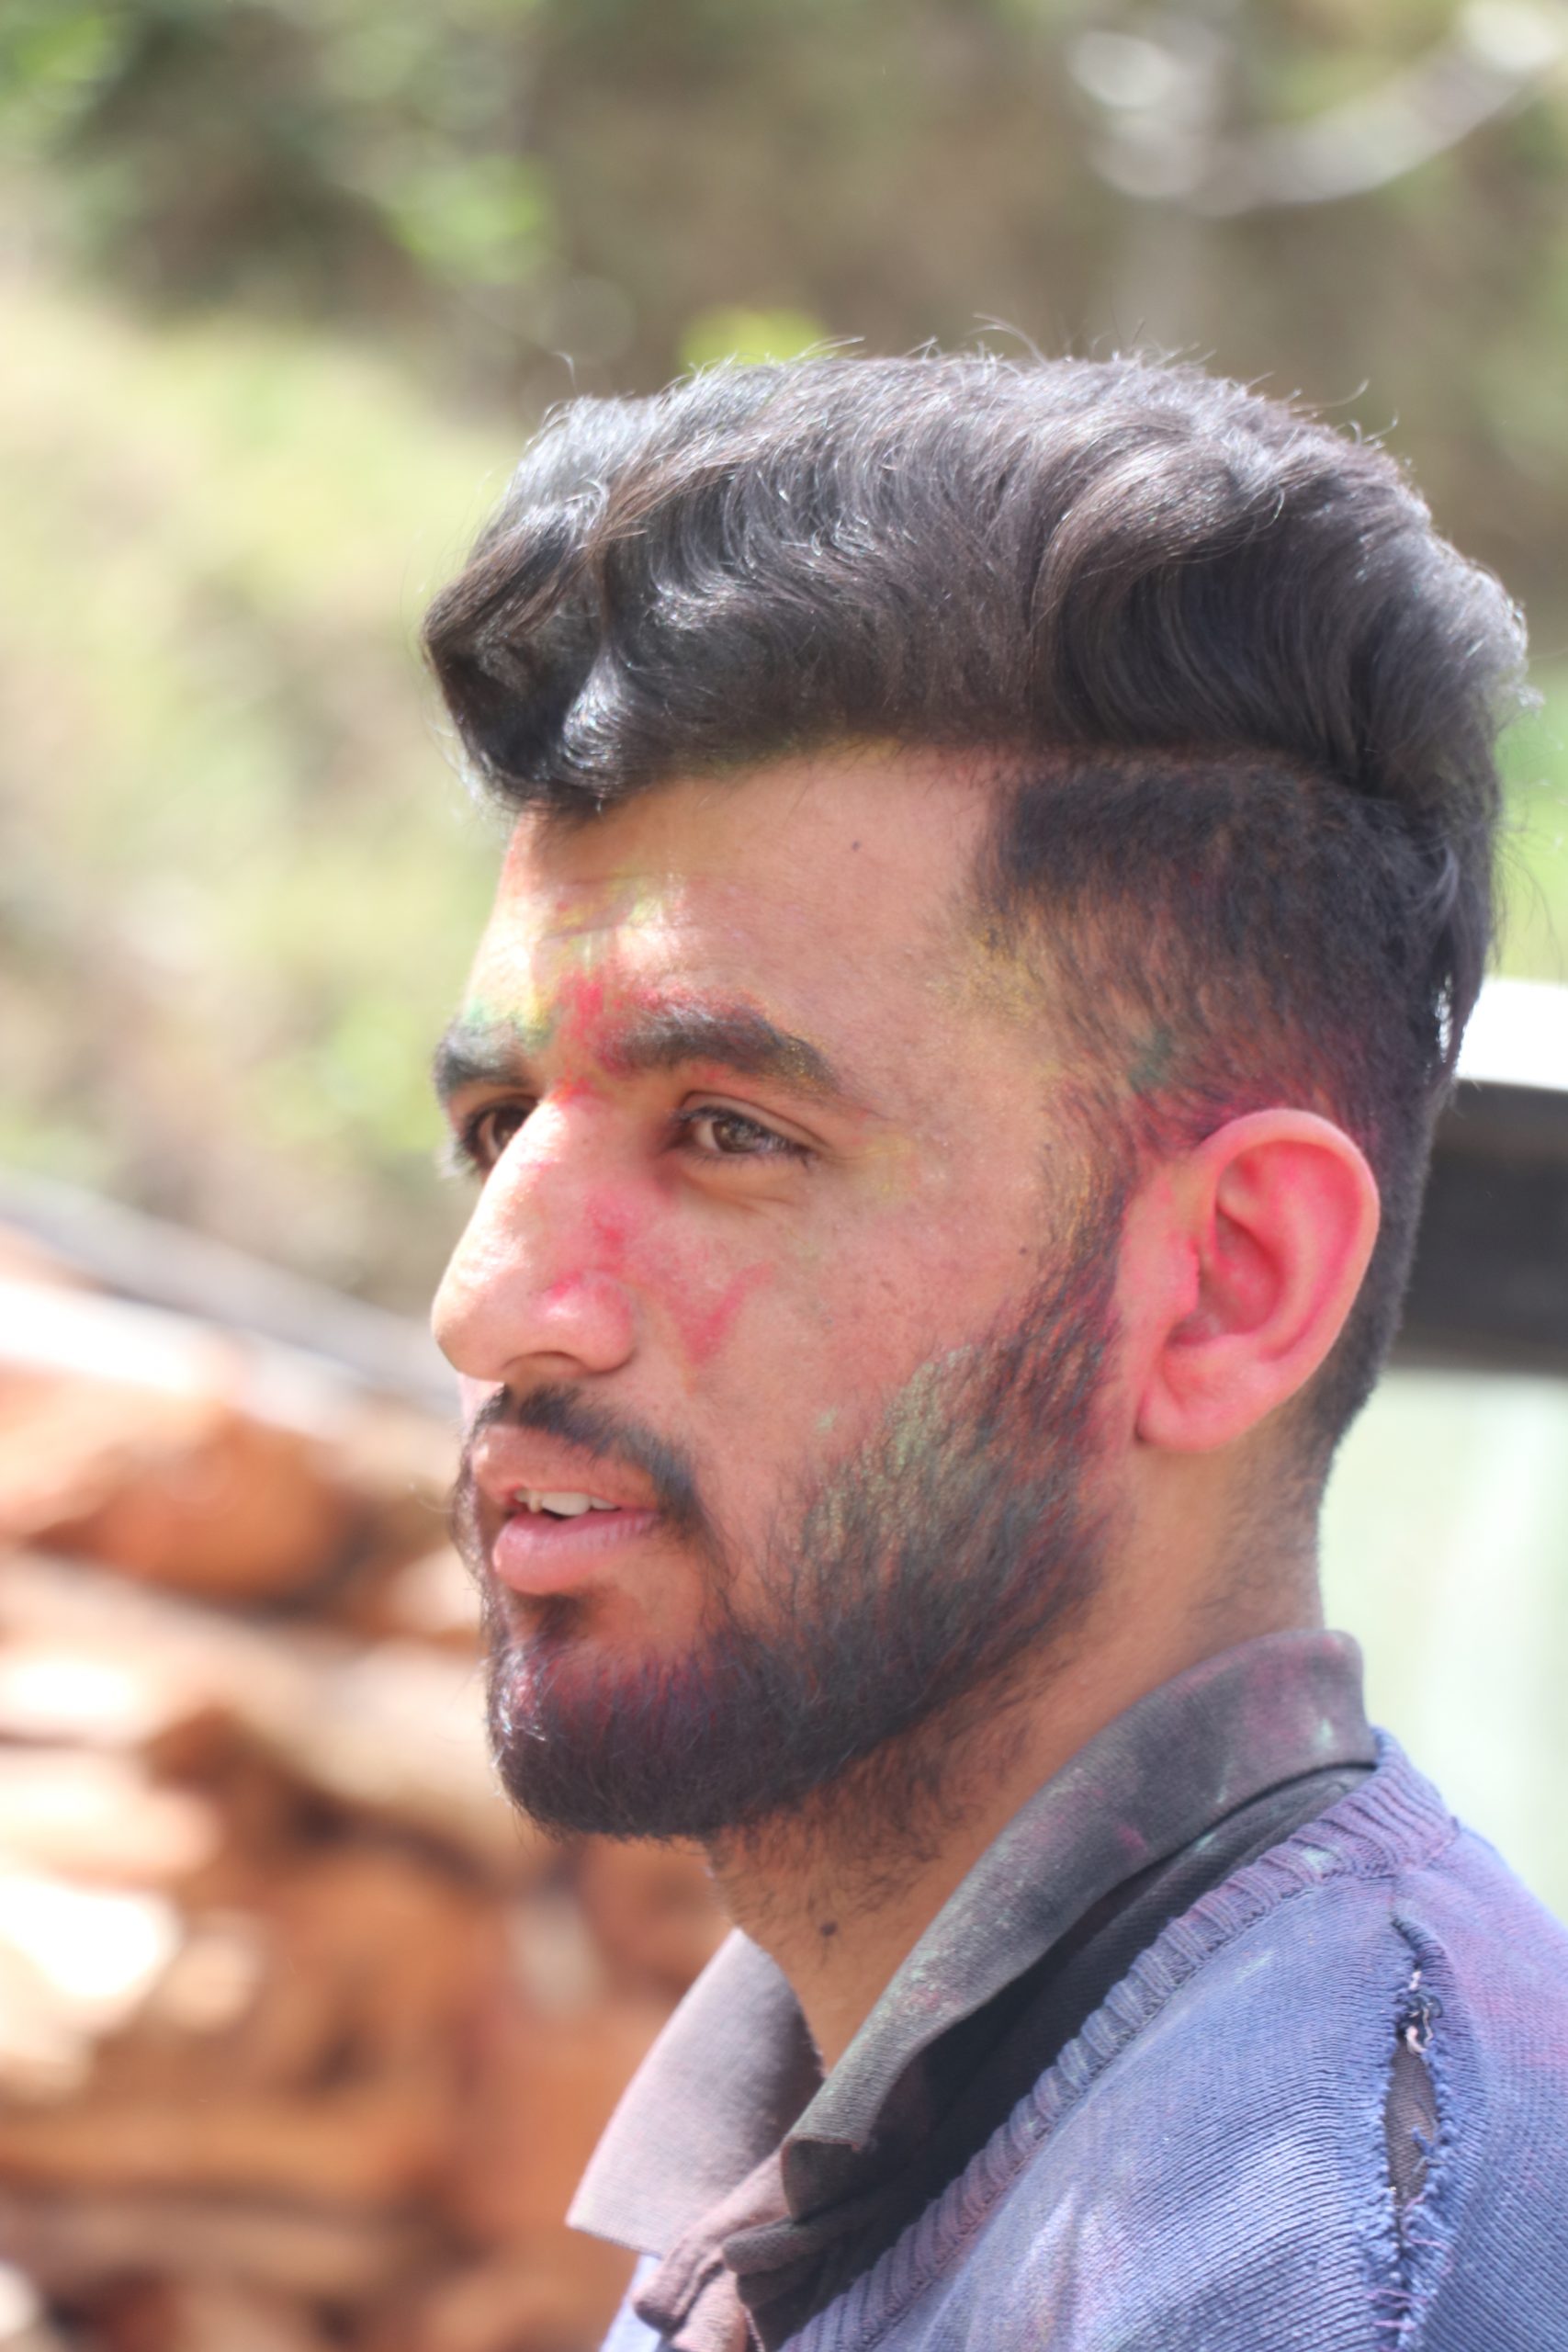 Holi colors on Boy's face